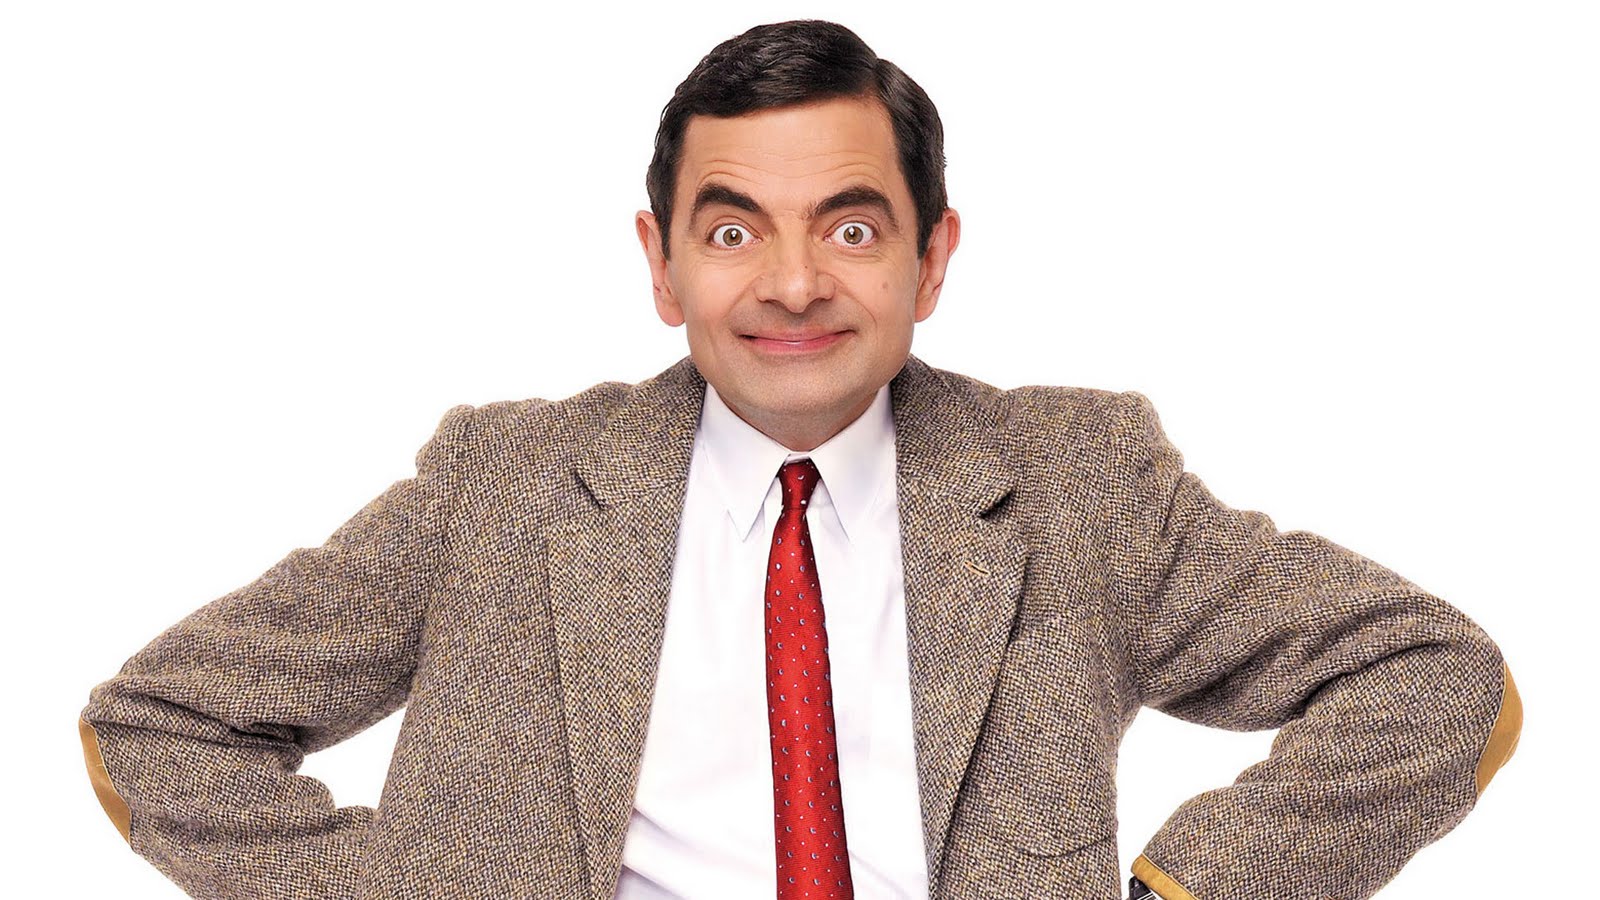 Mr Bean Funny HD Wallpaper For Desktop | Photo, Videos ...